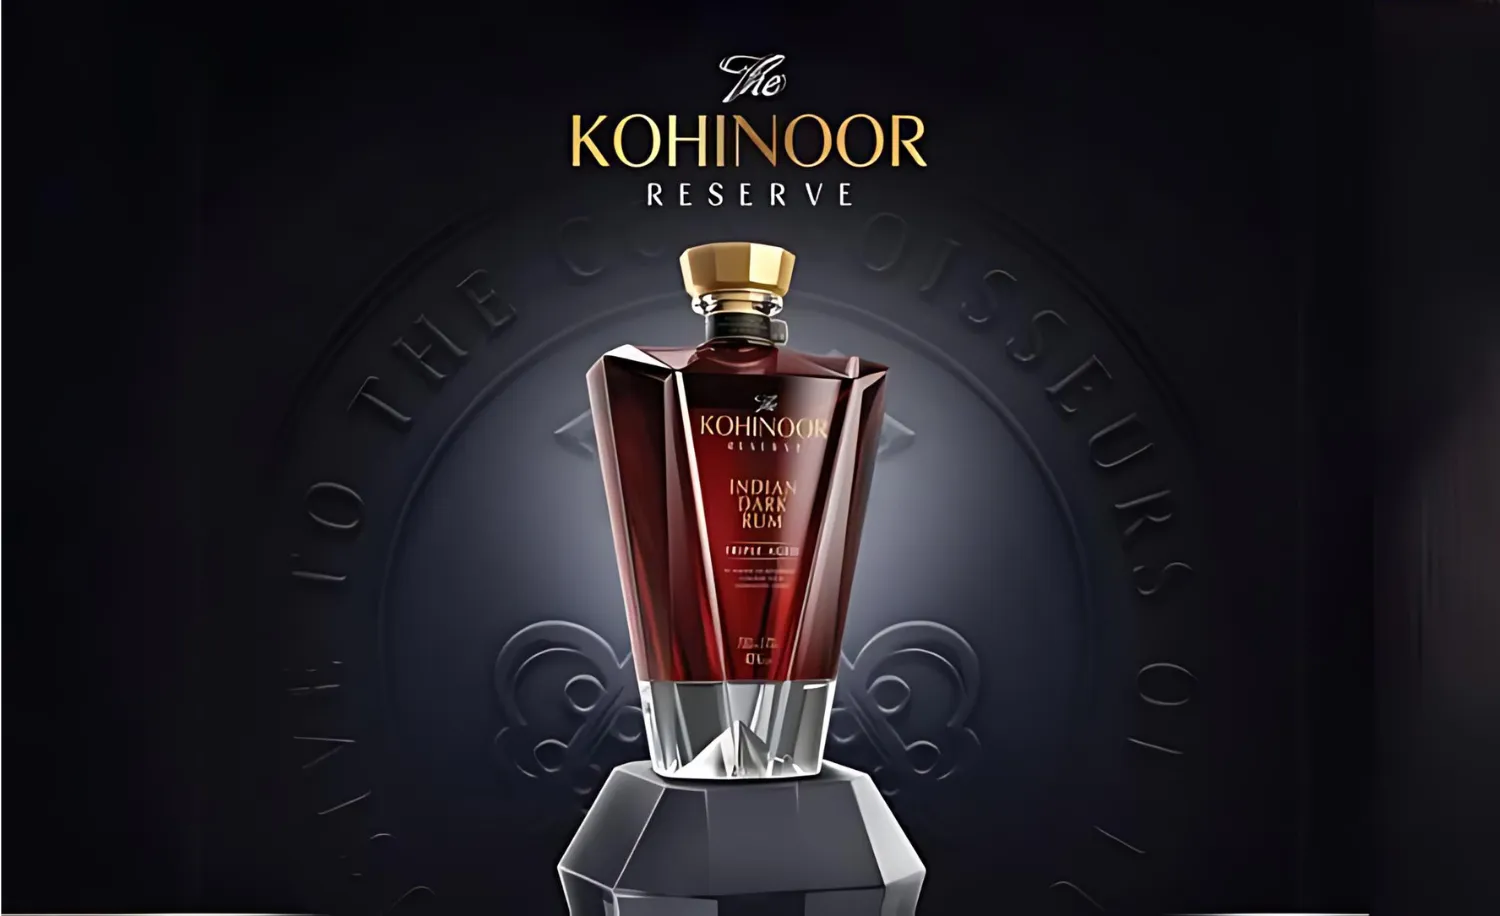 Radico launches The Kohinoor Reserve Indian Dark Rum